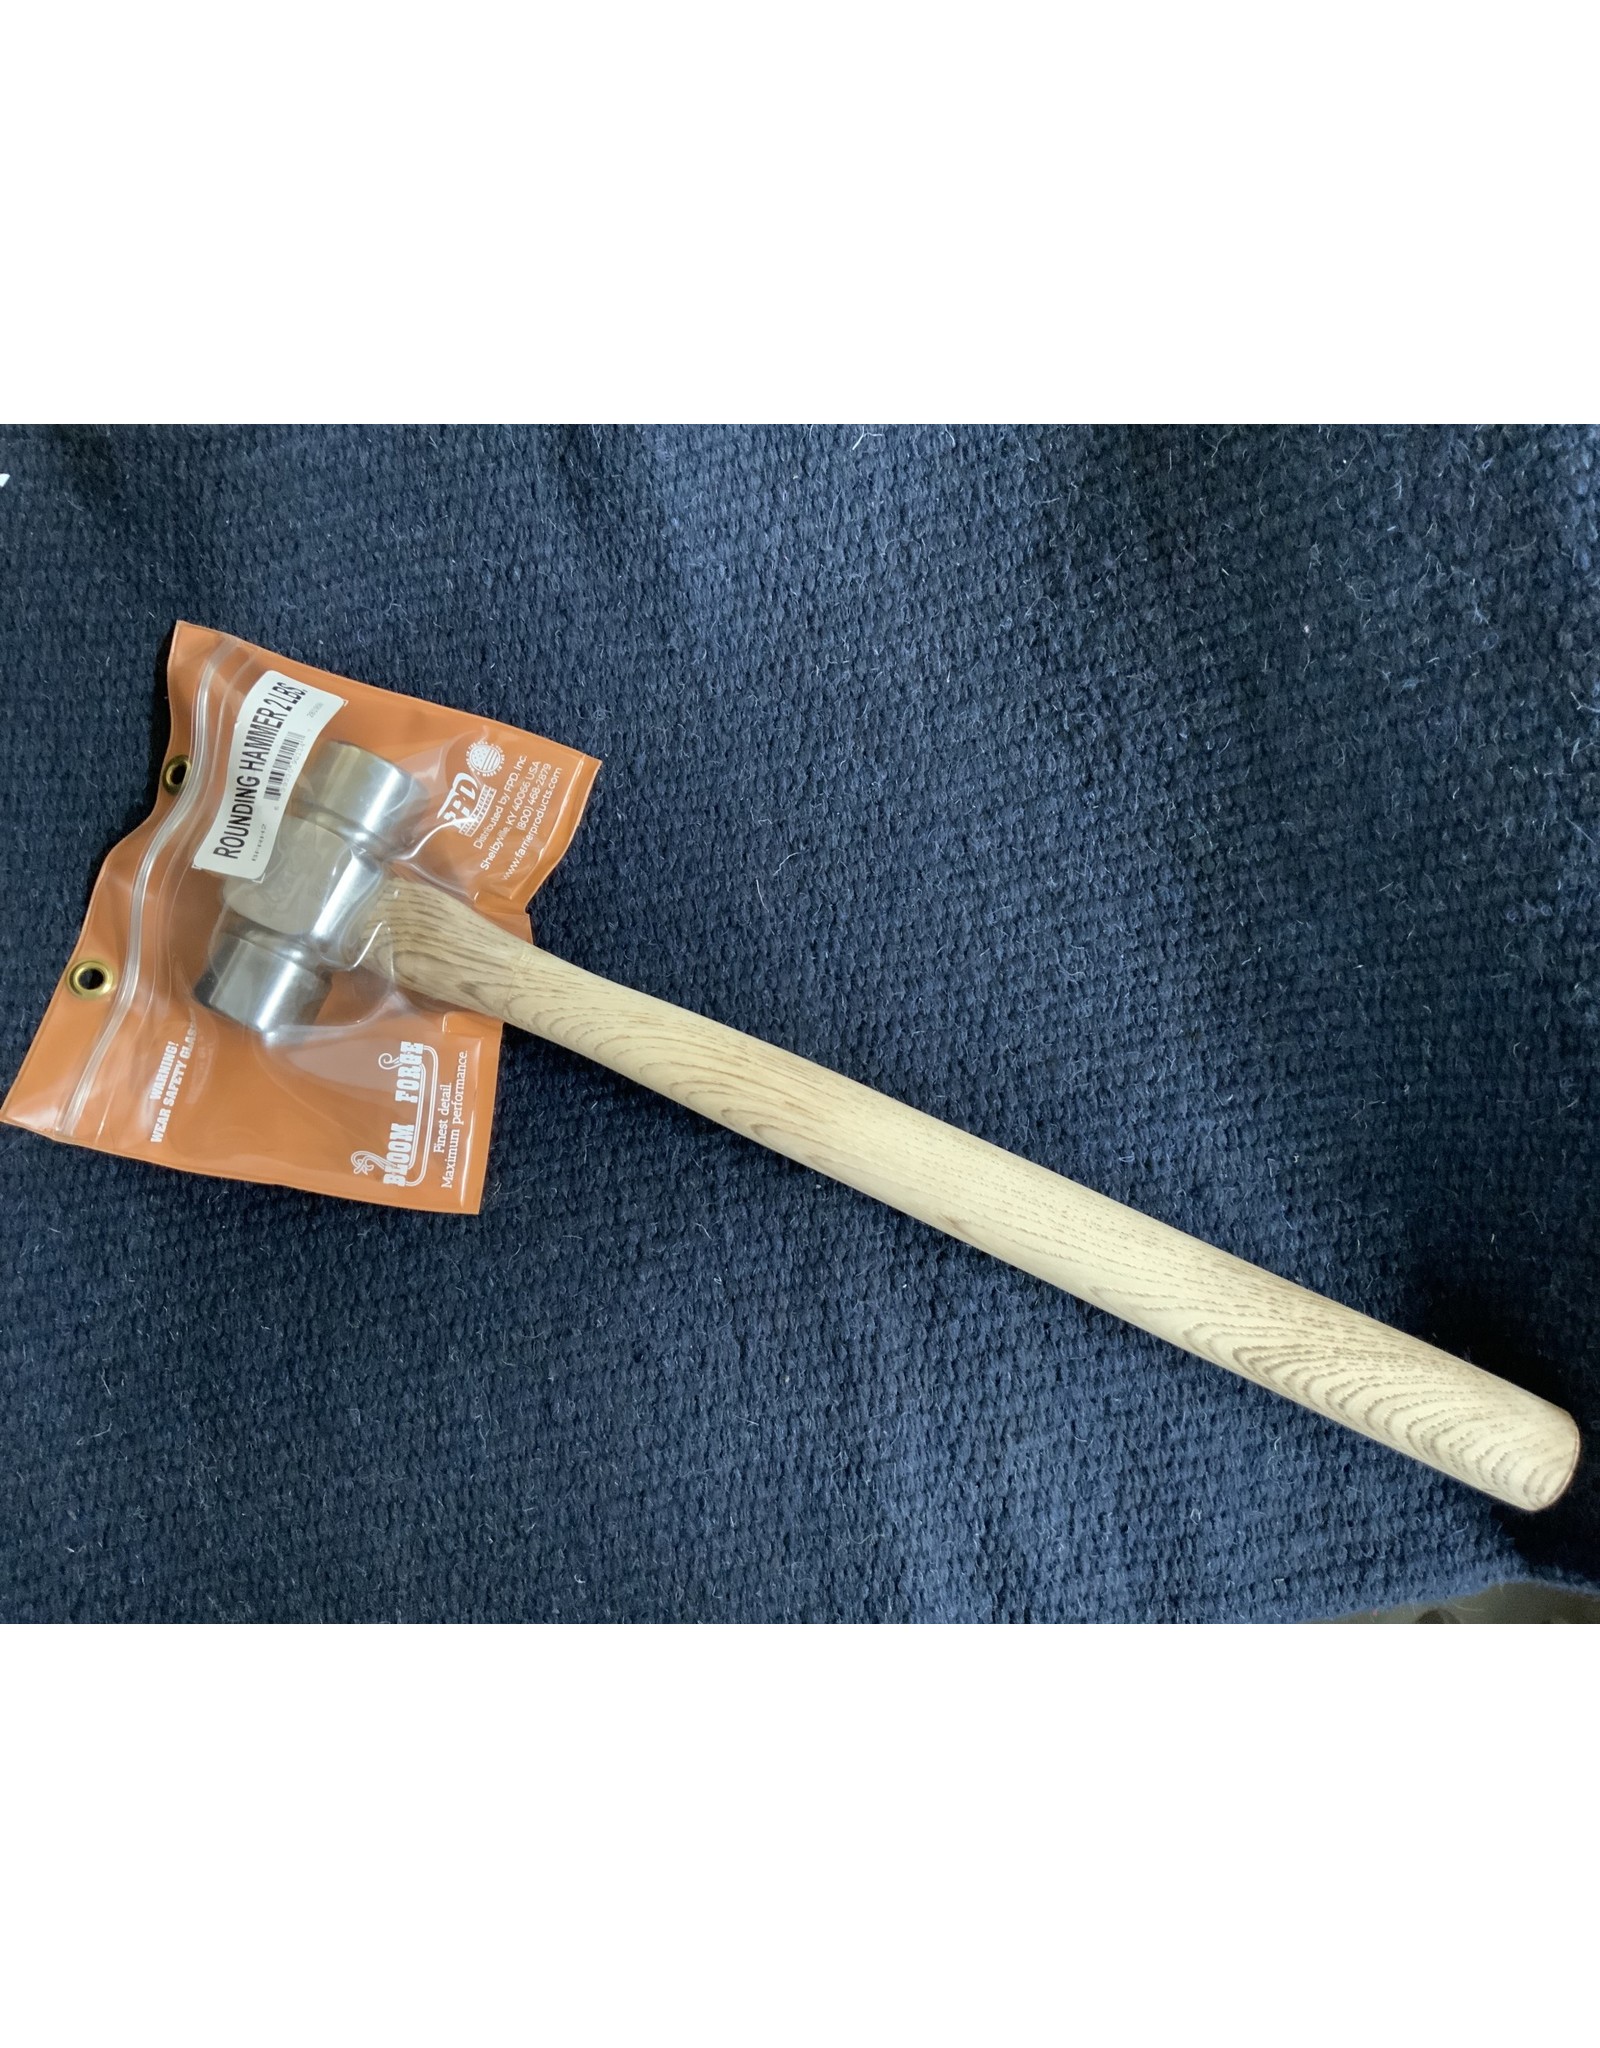 Hammer - Bloom Forge  - Rounding Hammer 2lbs - Regular item